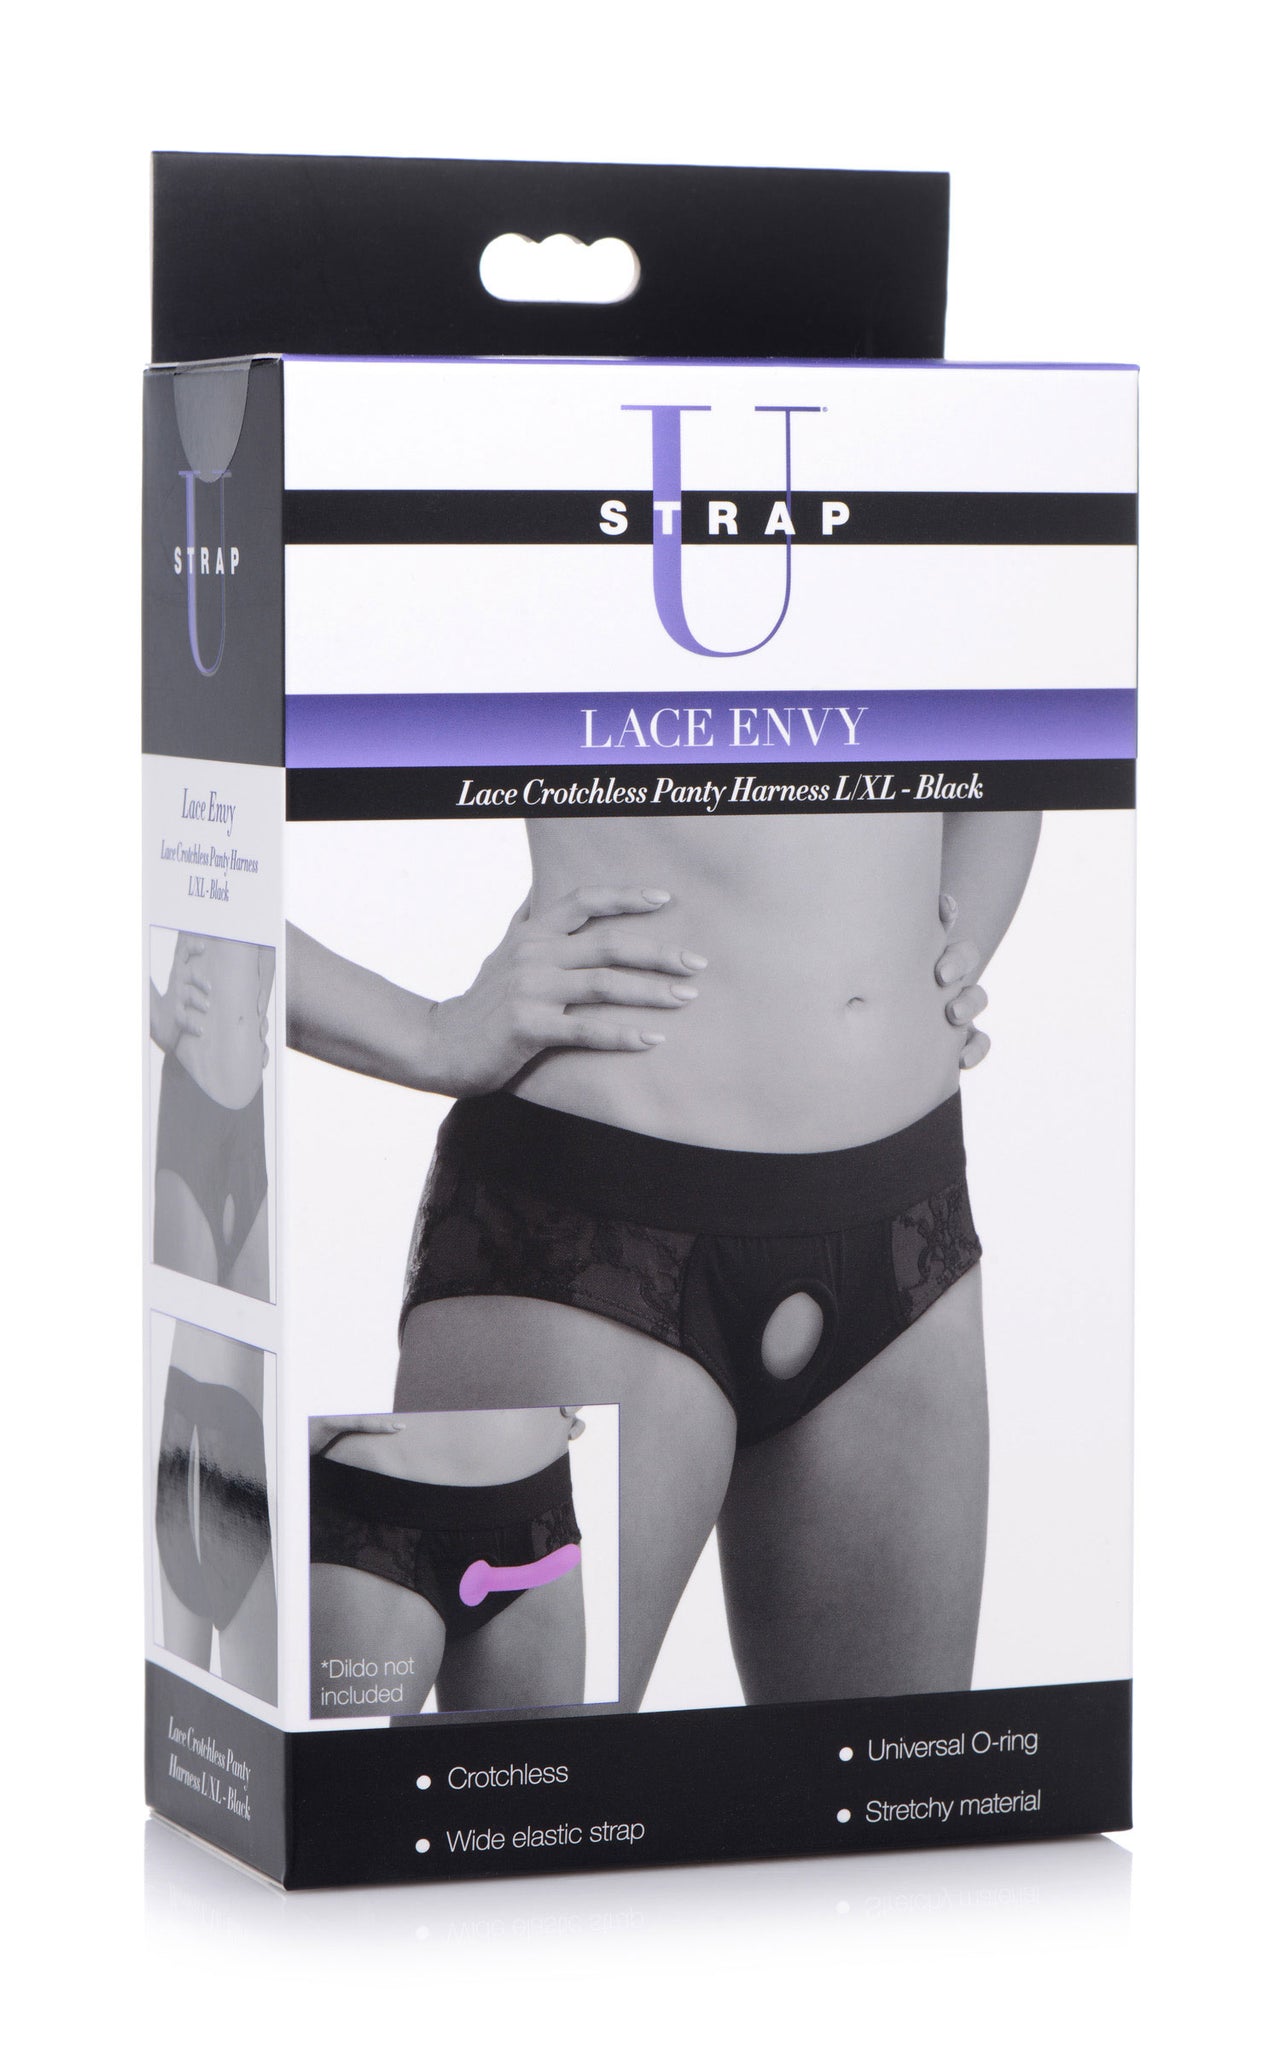 Lace Envy Black Crotchless Panty Harness - L/xl